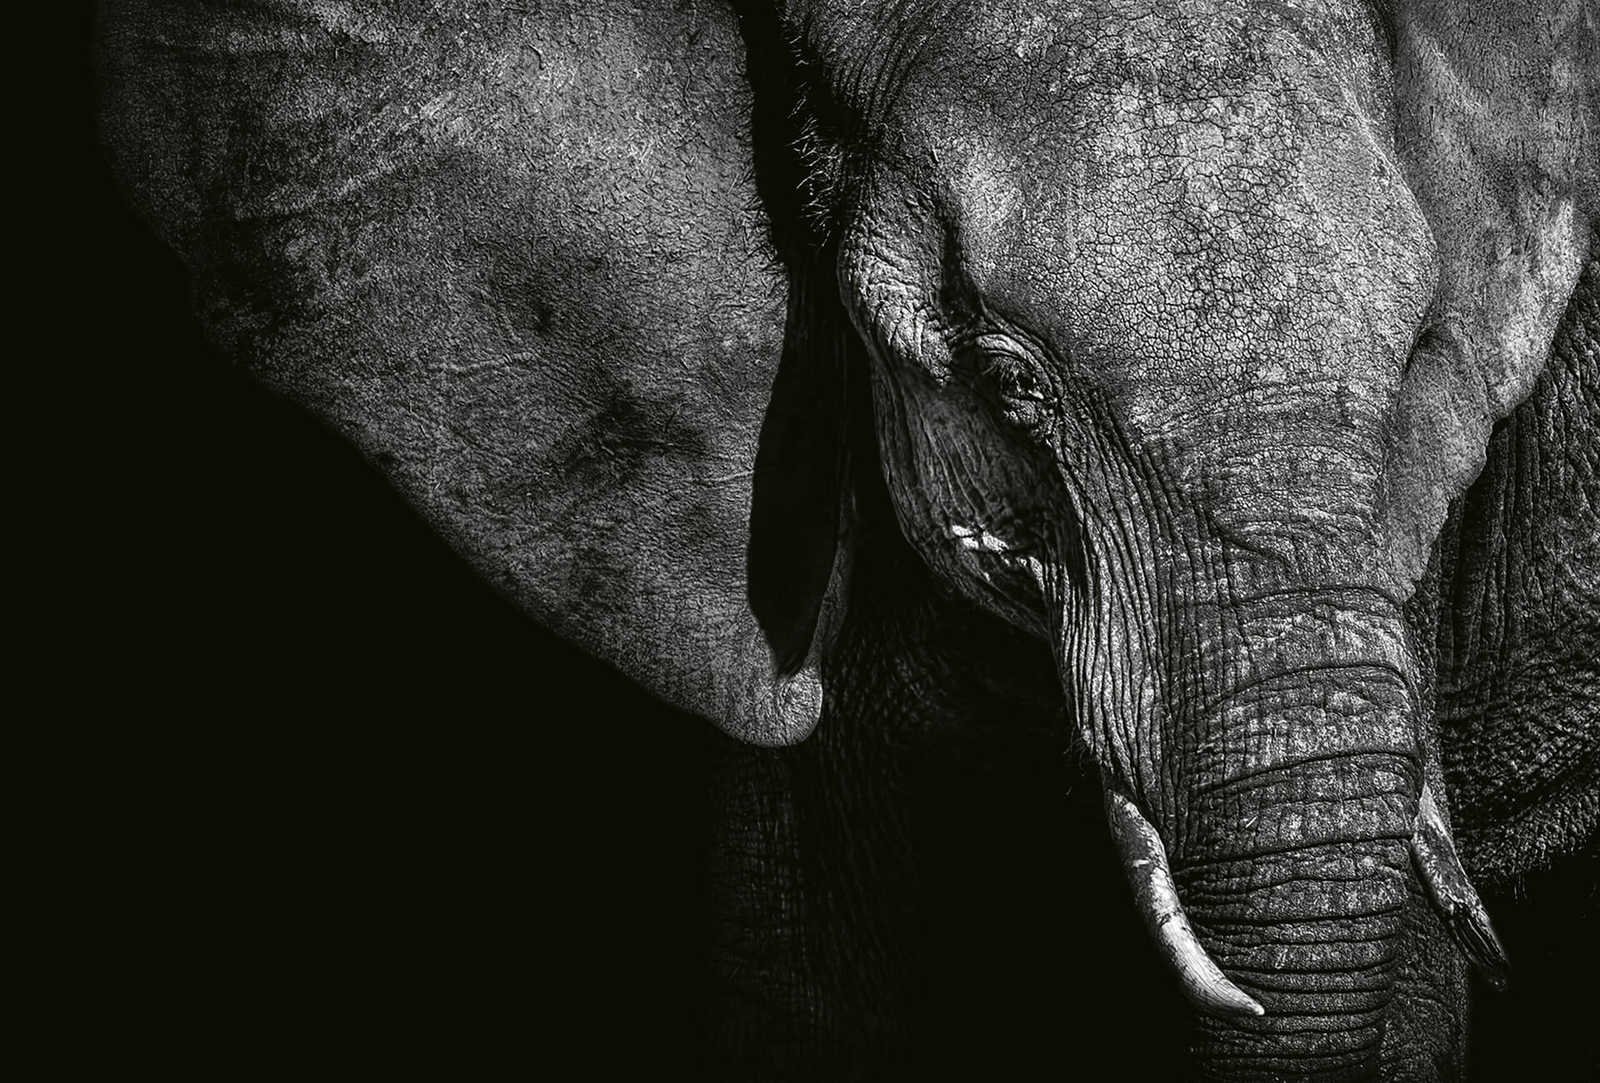         Photo wallpaper animal elephant - black, grey, white
    